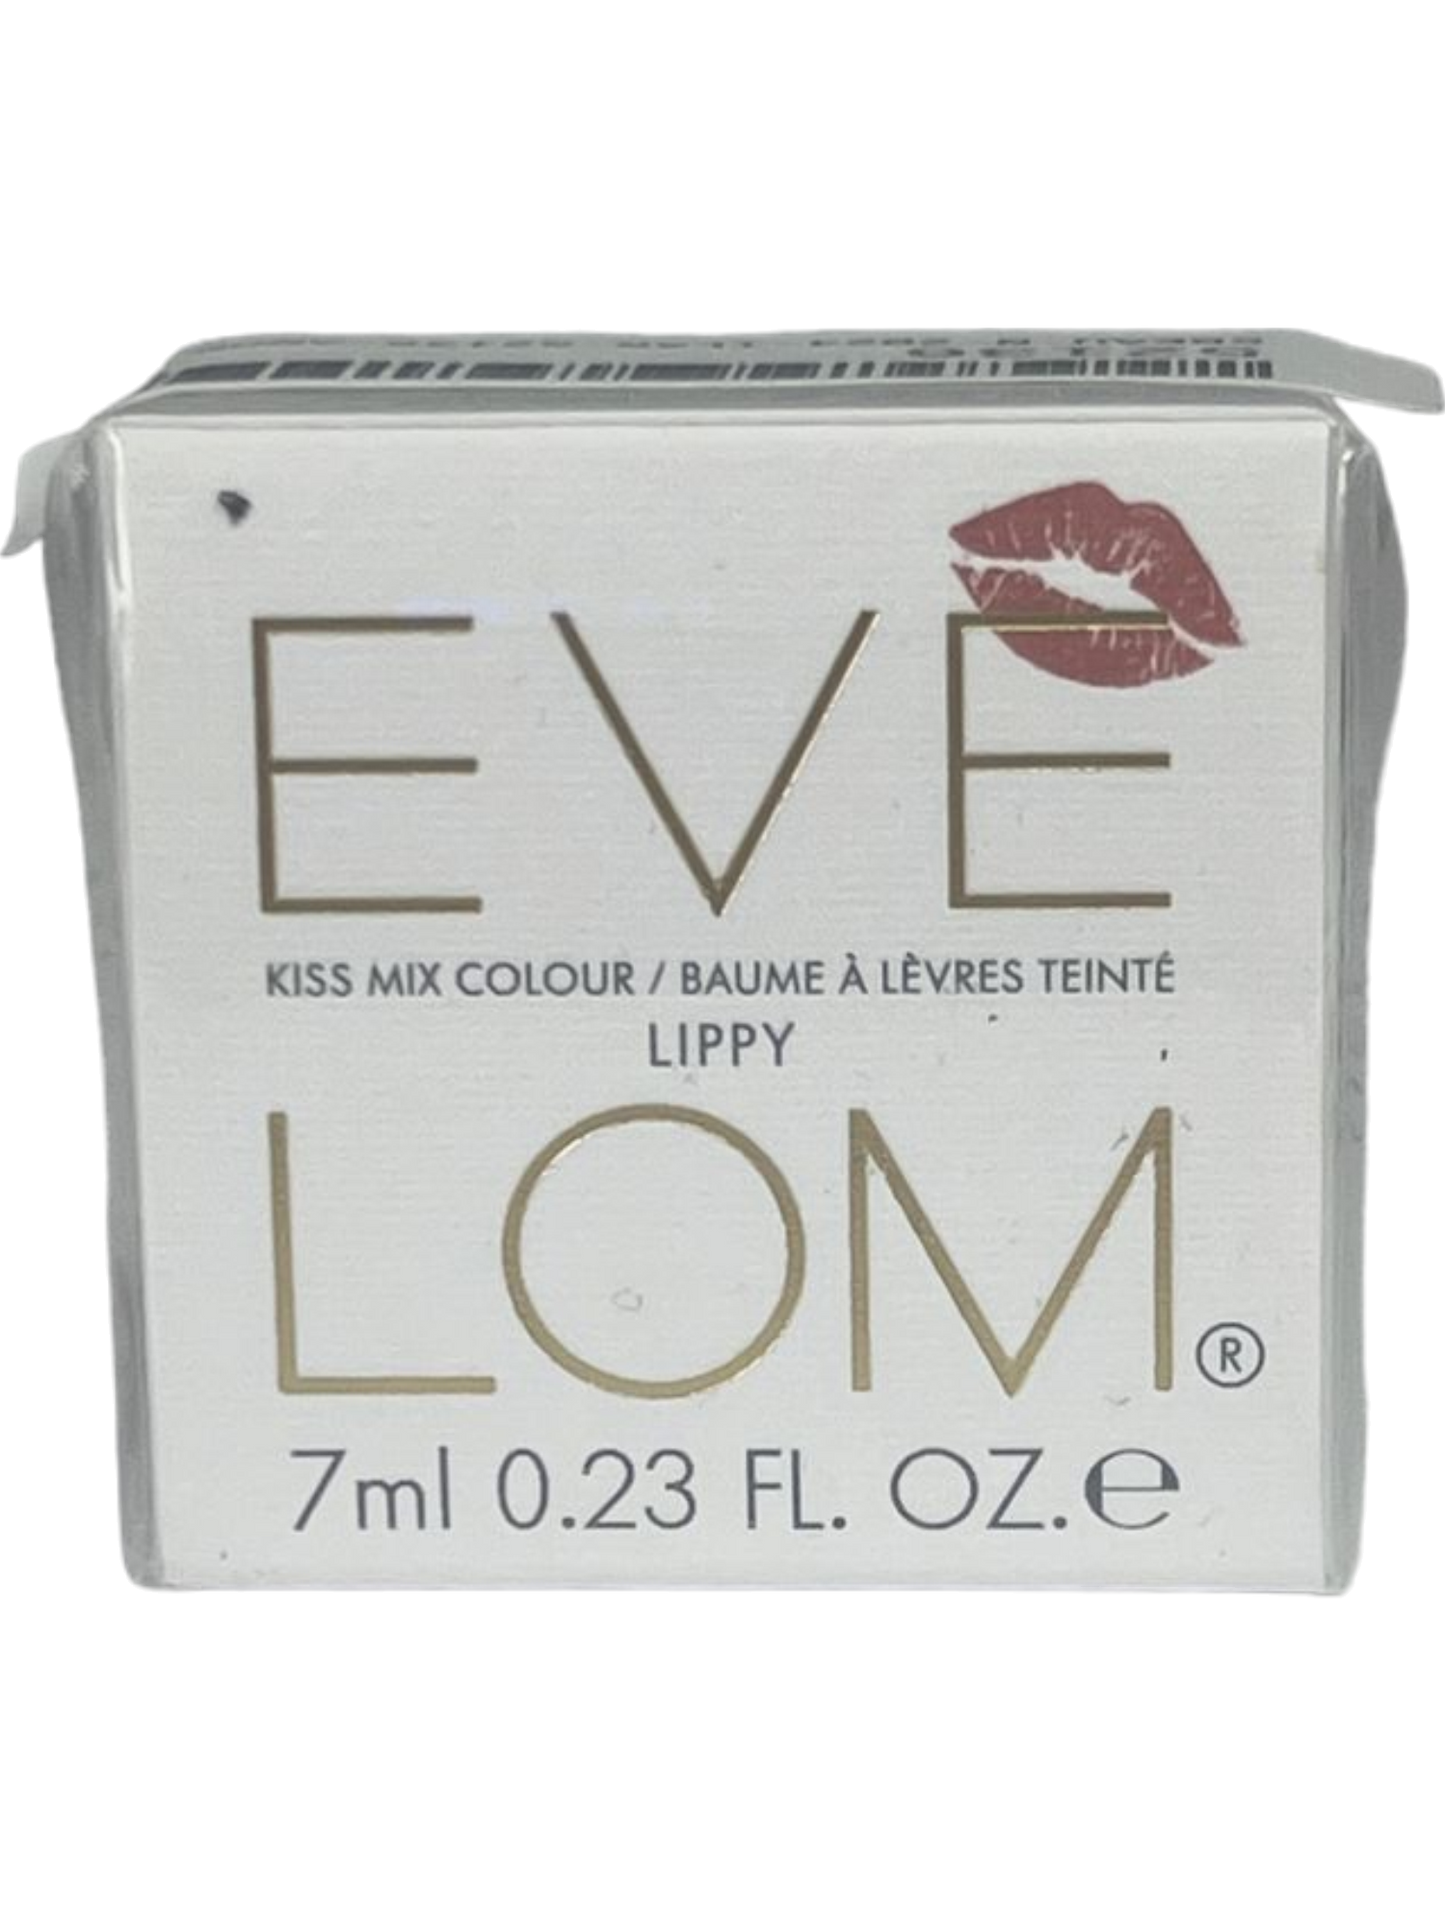 Eve Lom Kiss Mix Colour Lippy in Lippy 7ml